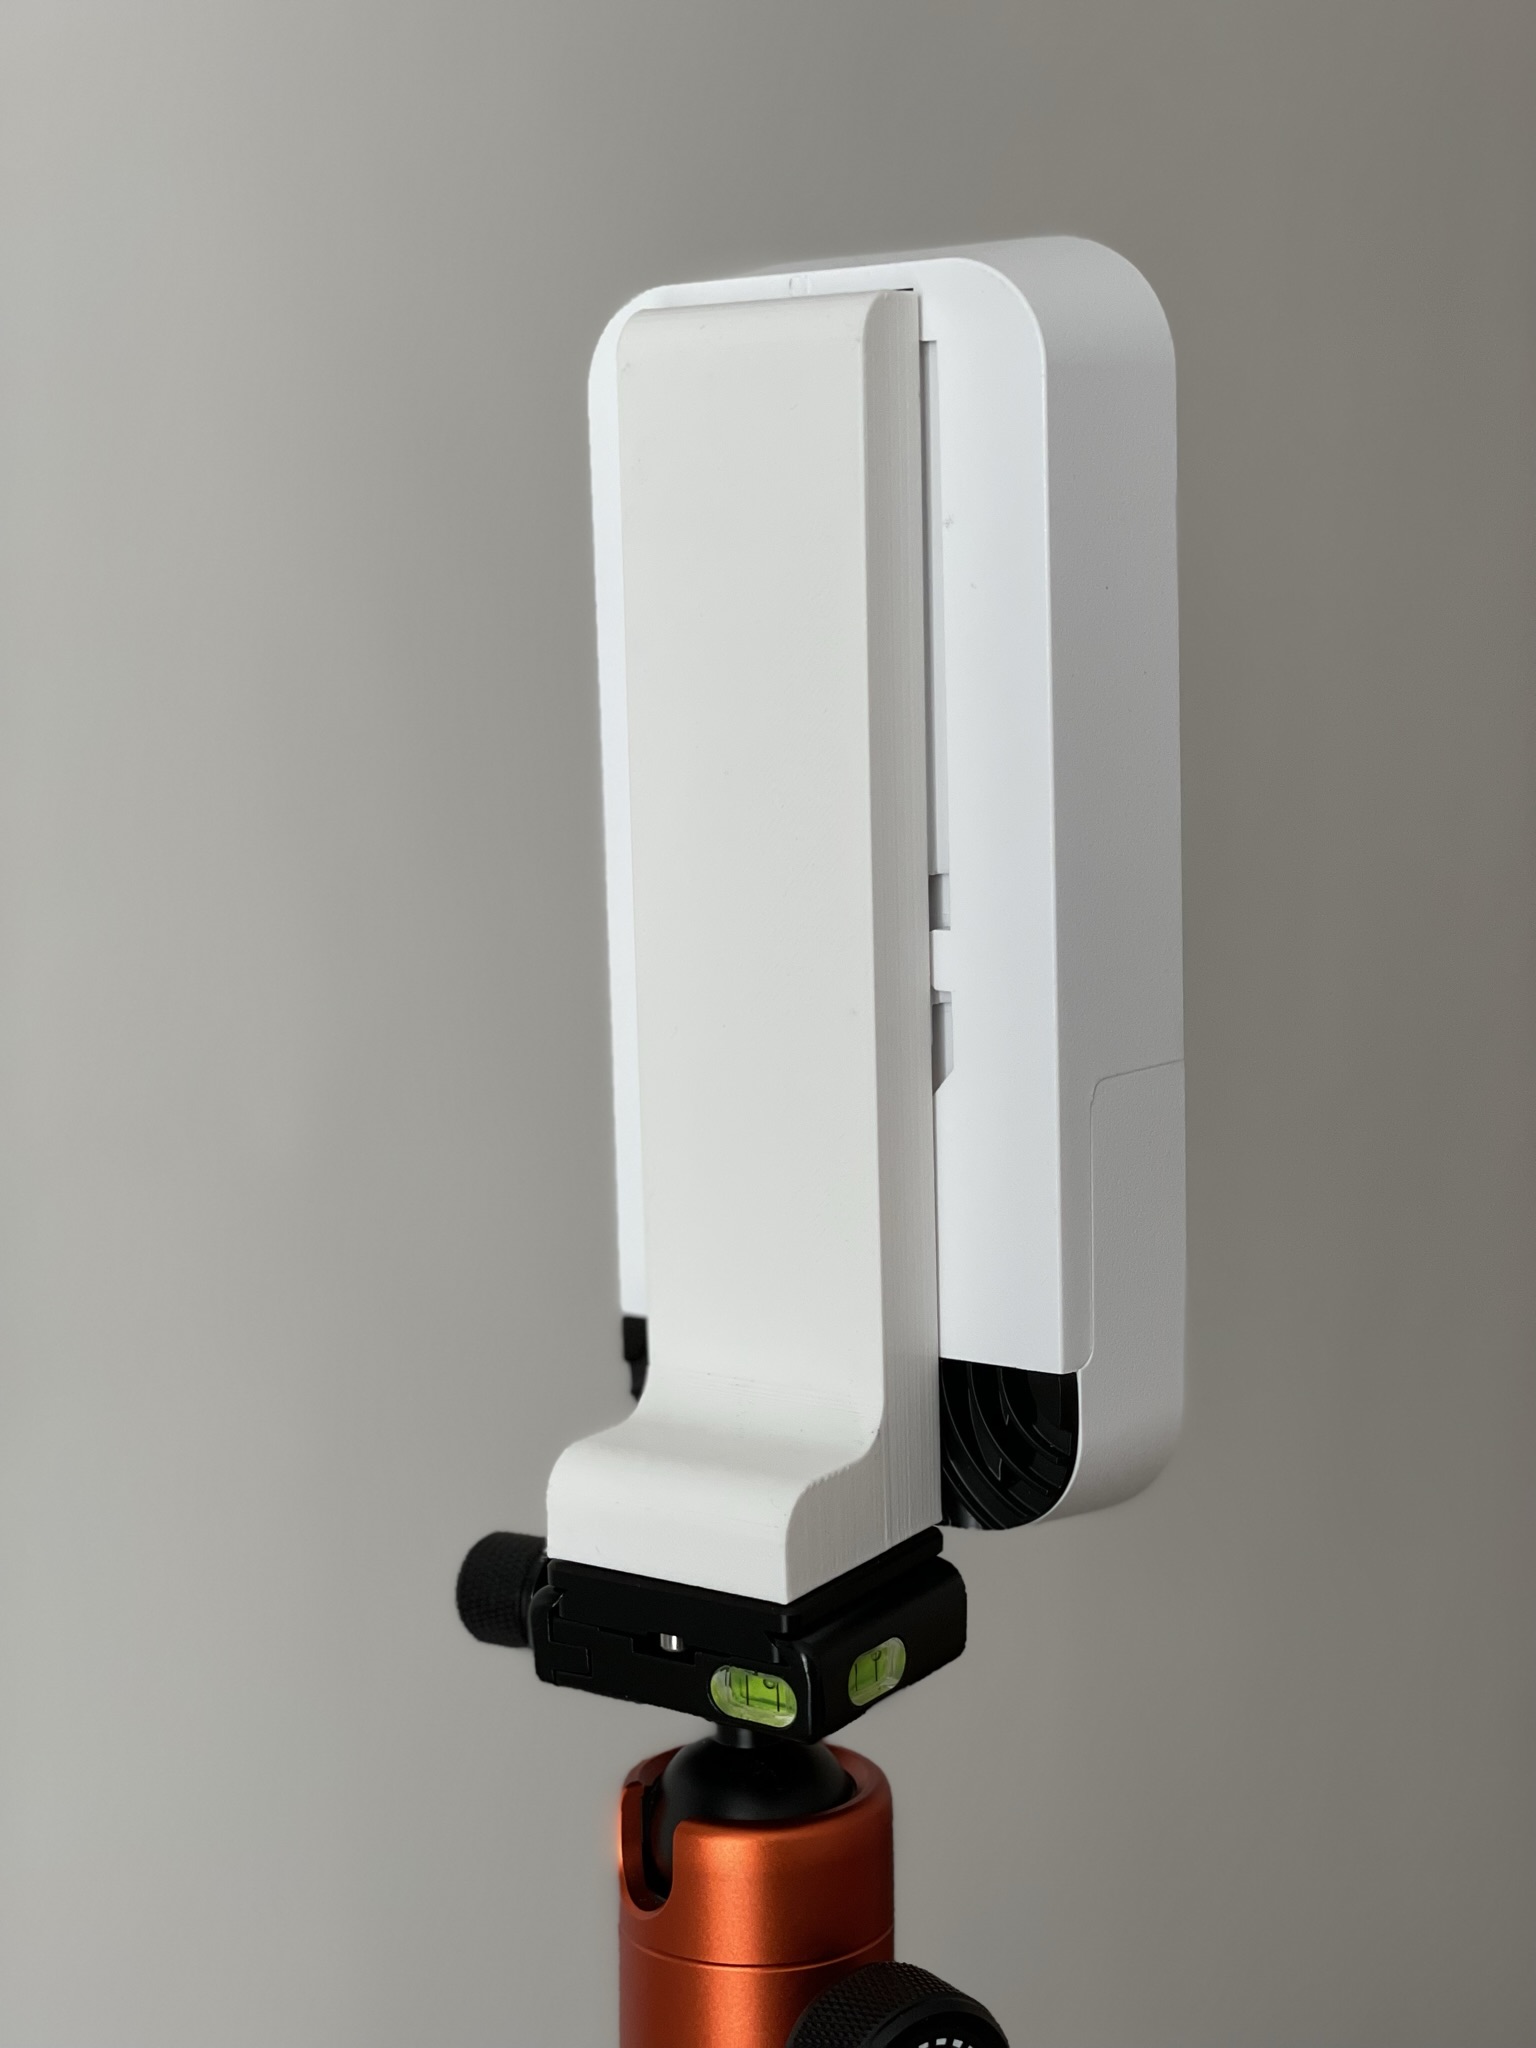 Tripod mount for Mikrotik wAP devices